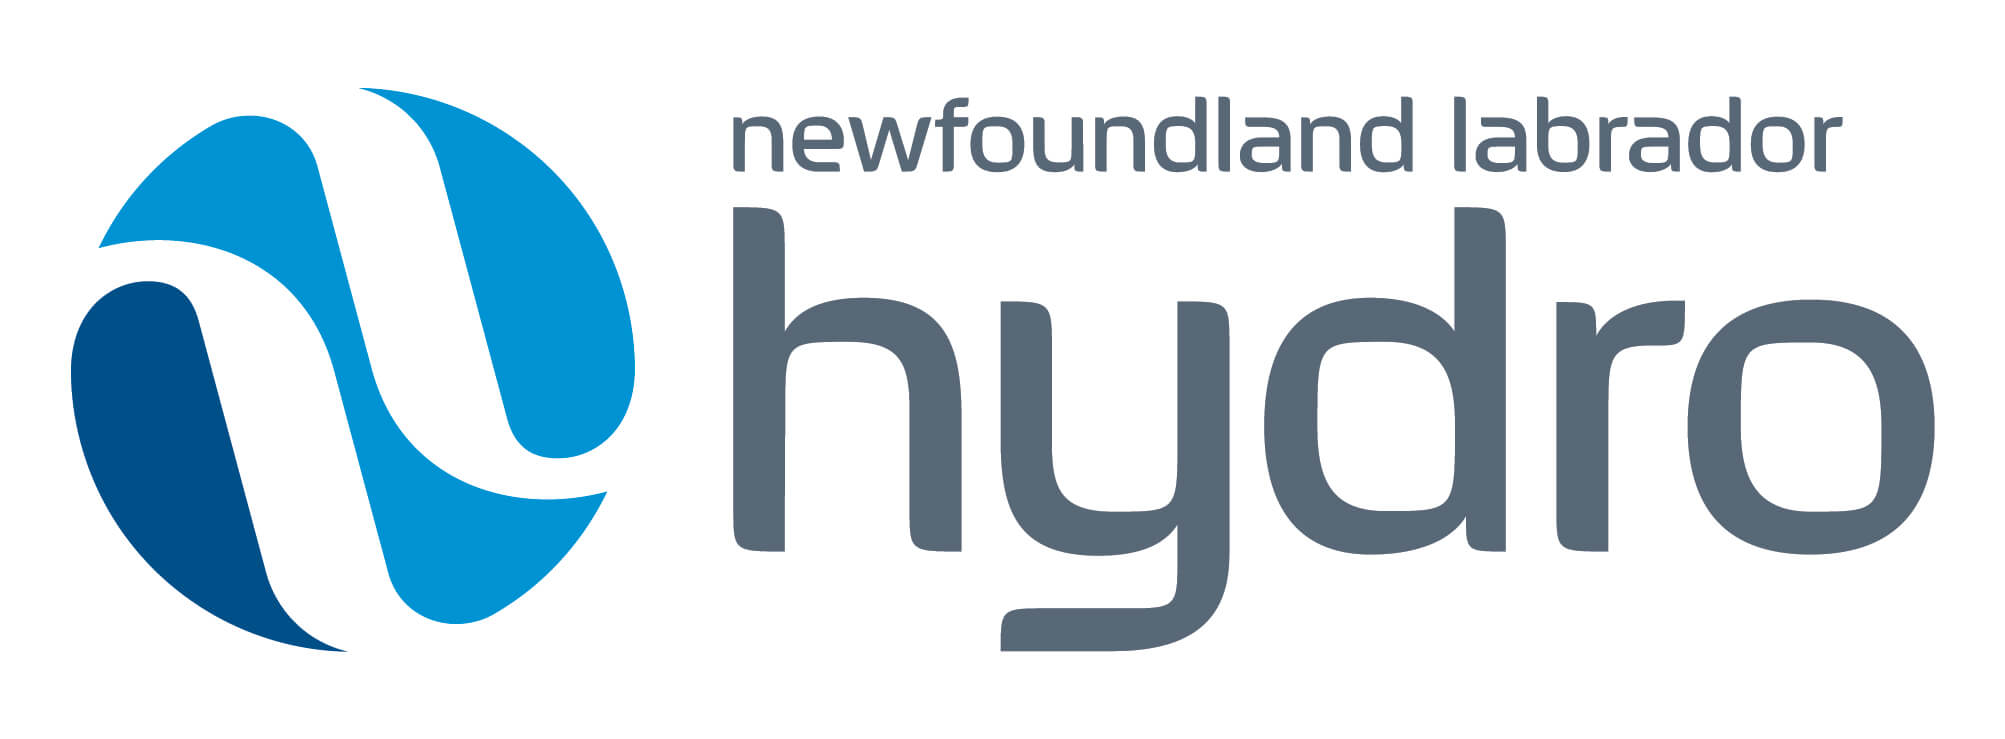 NL Hydro